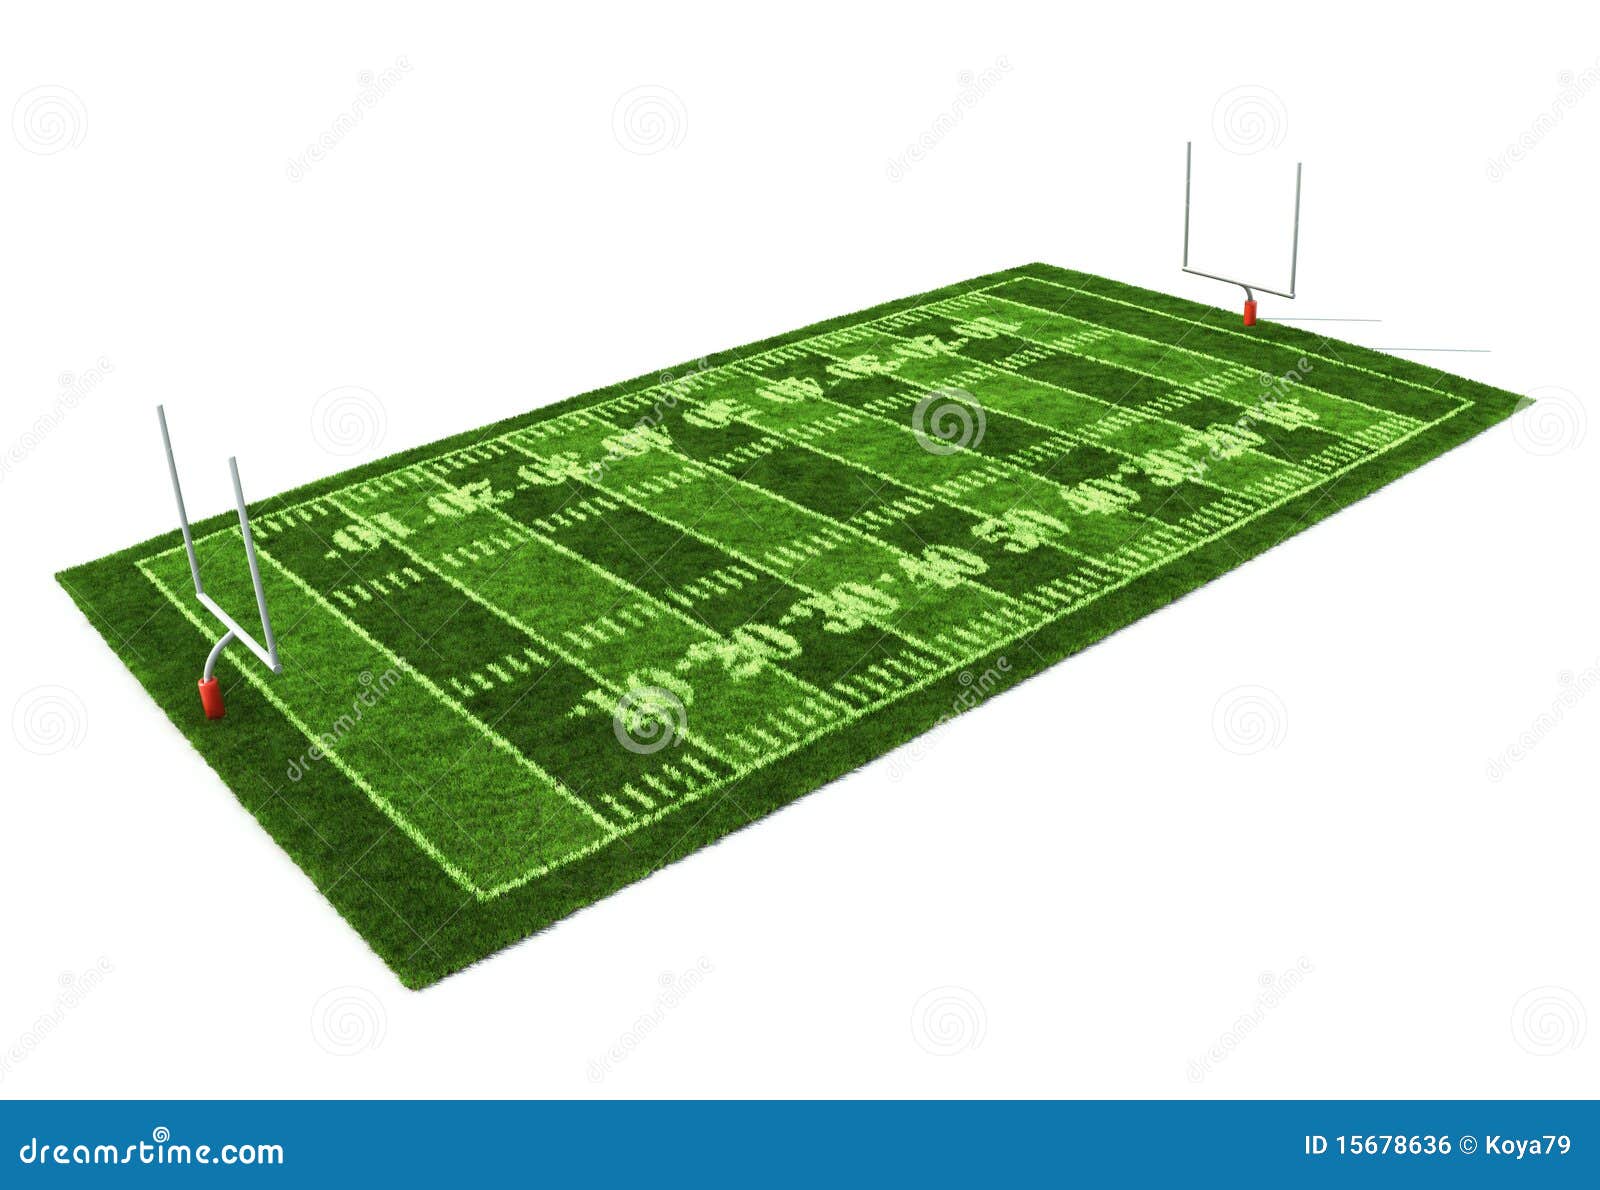 American football field stock illustration. Illustration of cartoon